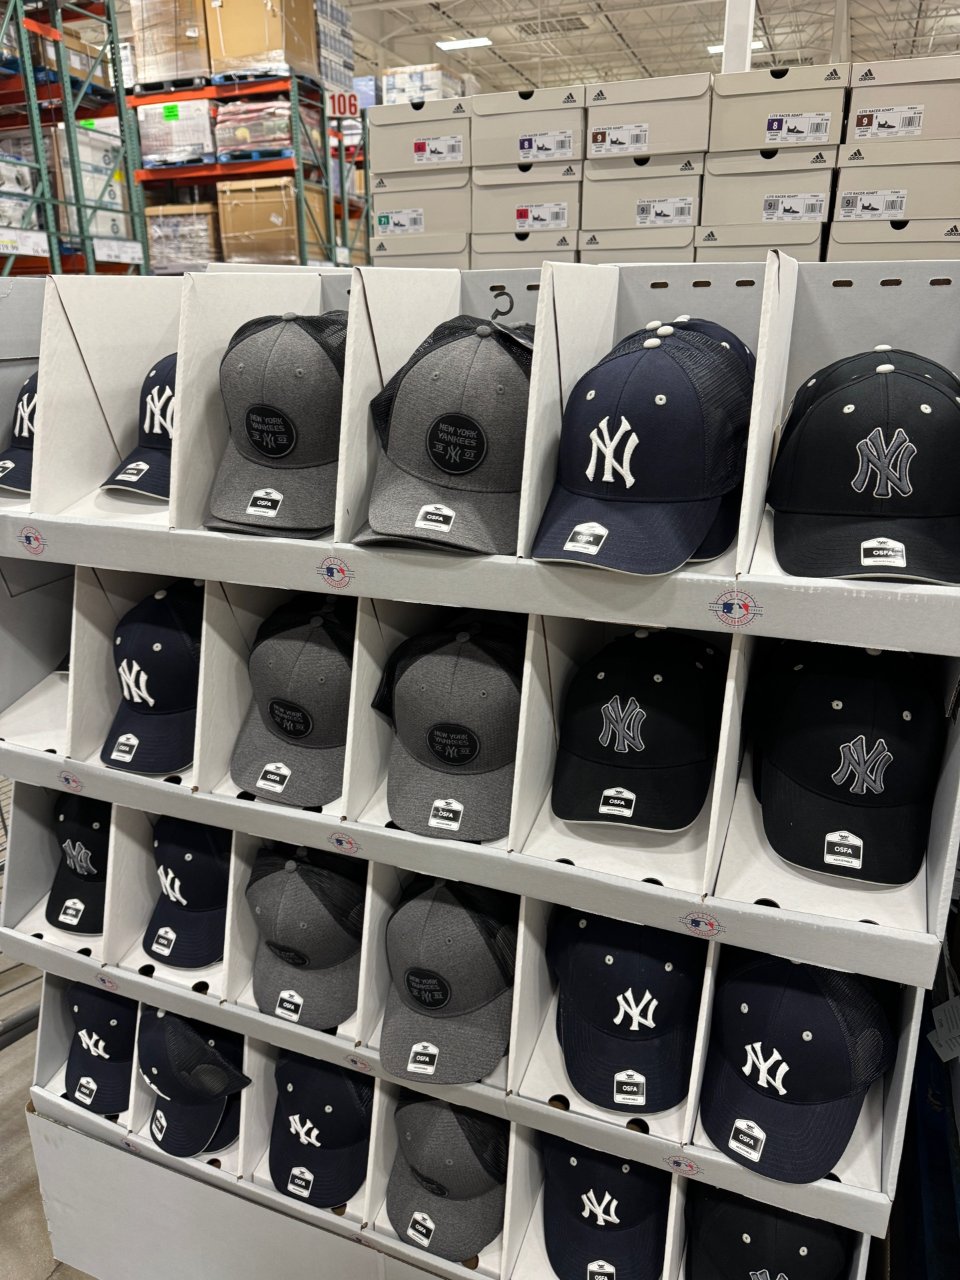 Costco MLB帽子仅需13.99！...